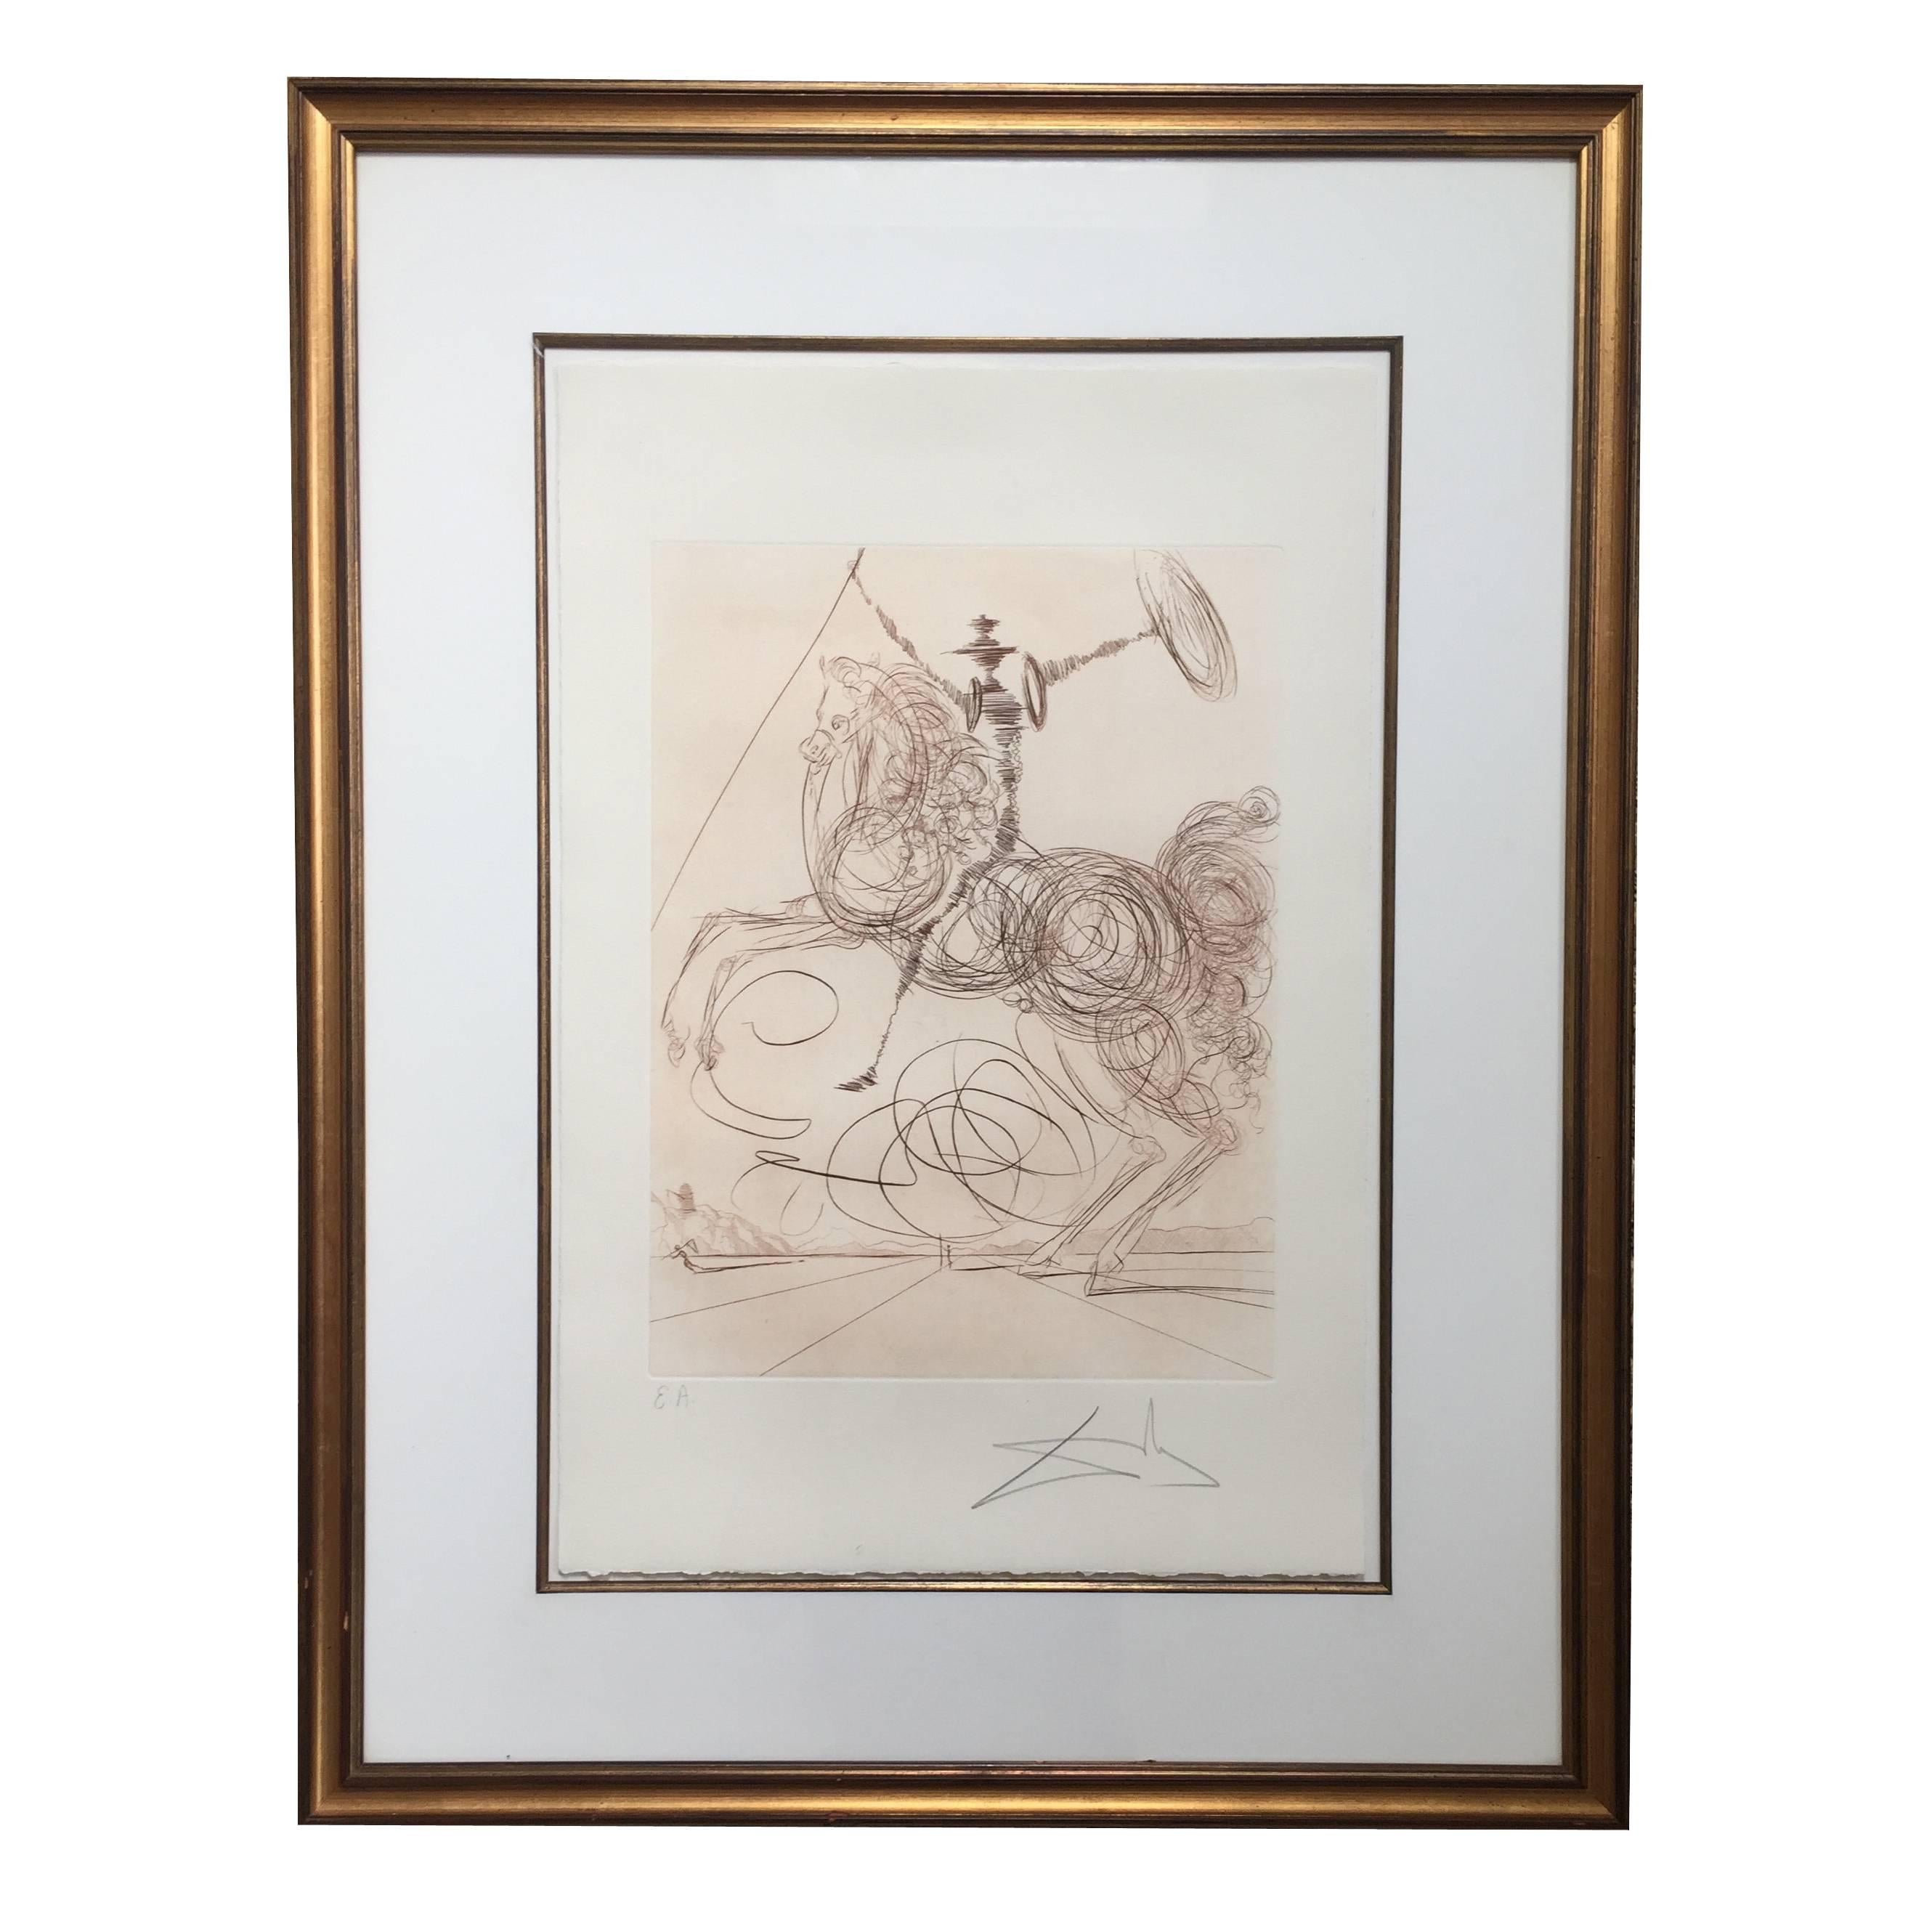 Salvador Dali, "Horseman", etching, signed and inscribed "E.A.", 1975